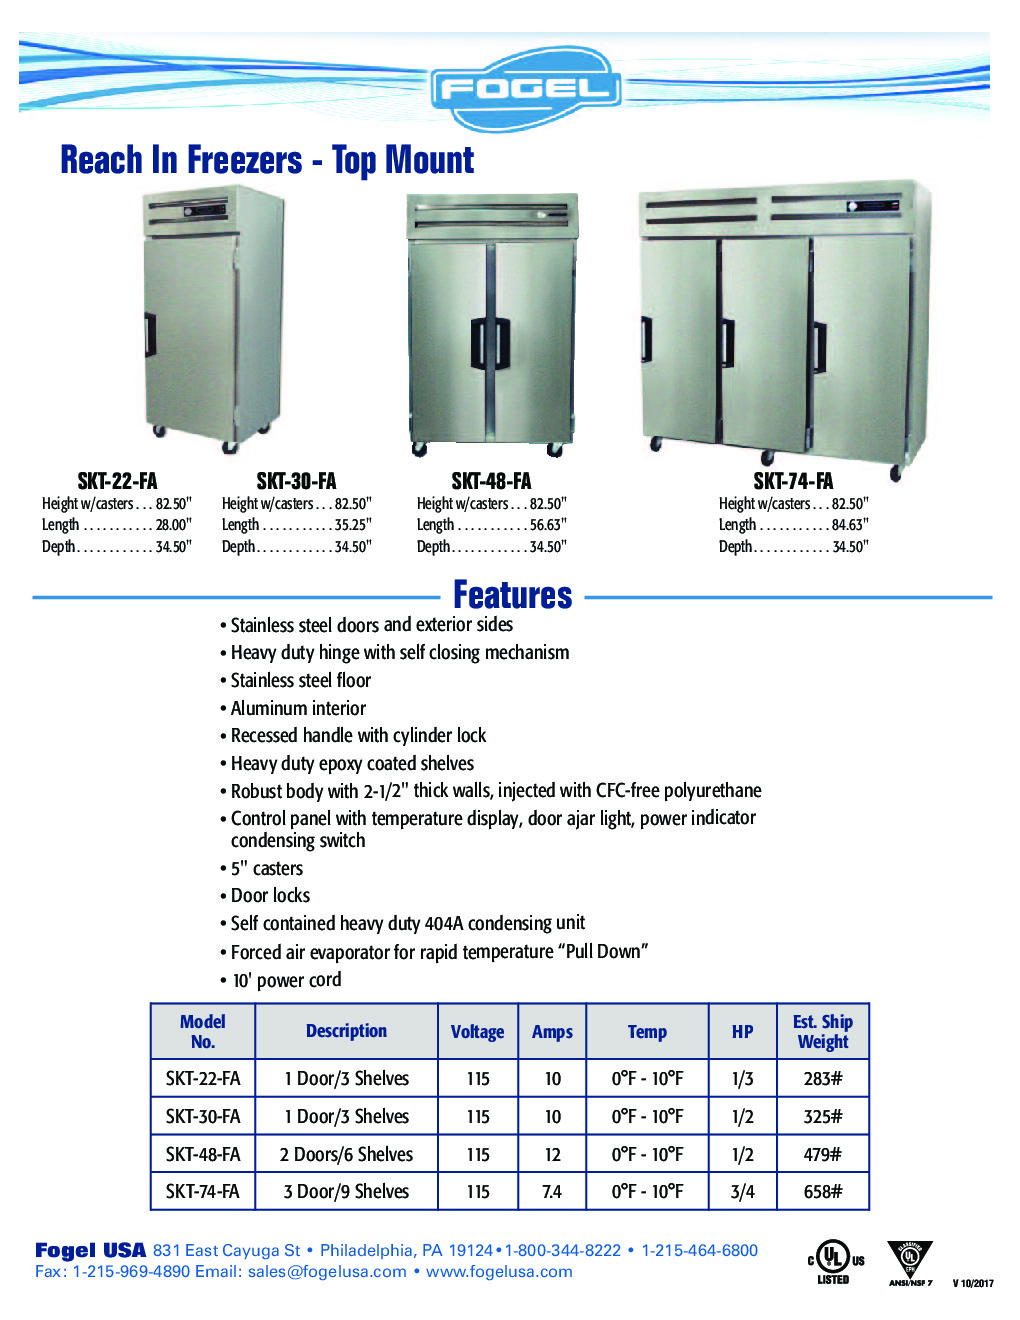 Fogel USA SKT-30-FA Reach-In Freezer